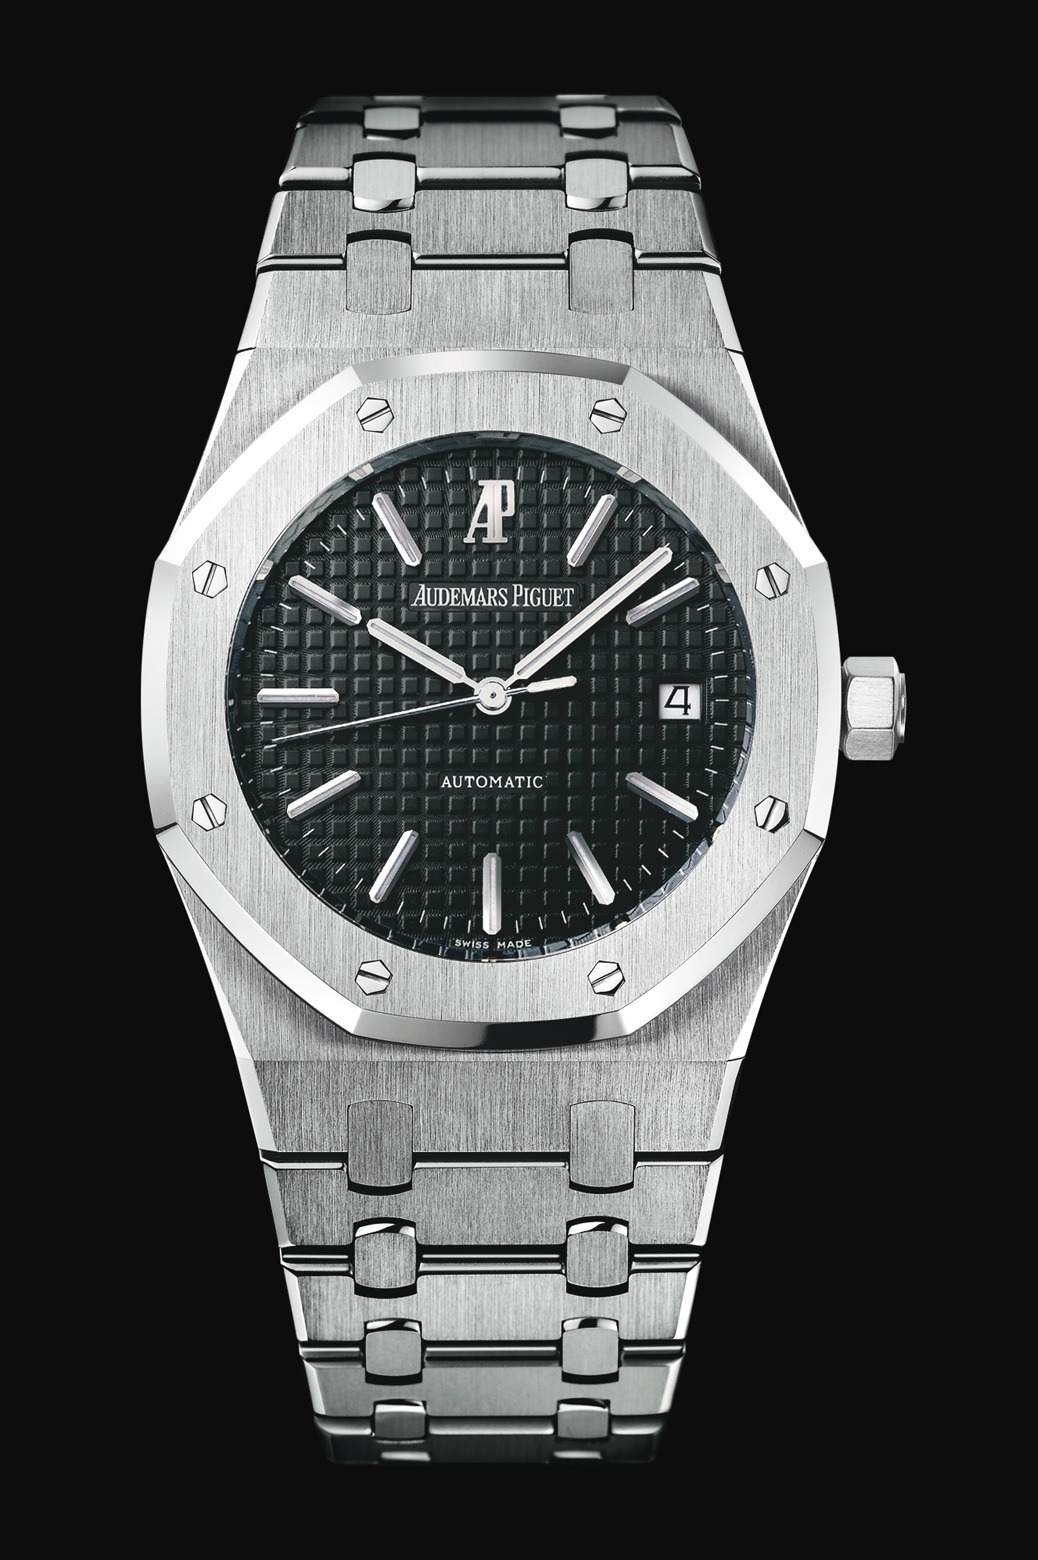 Audemars Piguet Royal Oak Automatic Steel watch REF: 15300ST.OO.1220ST.03